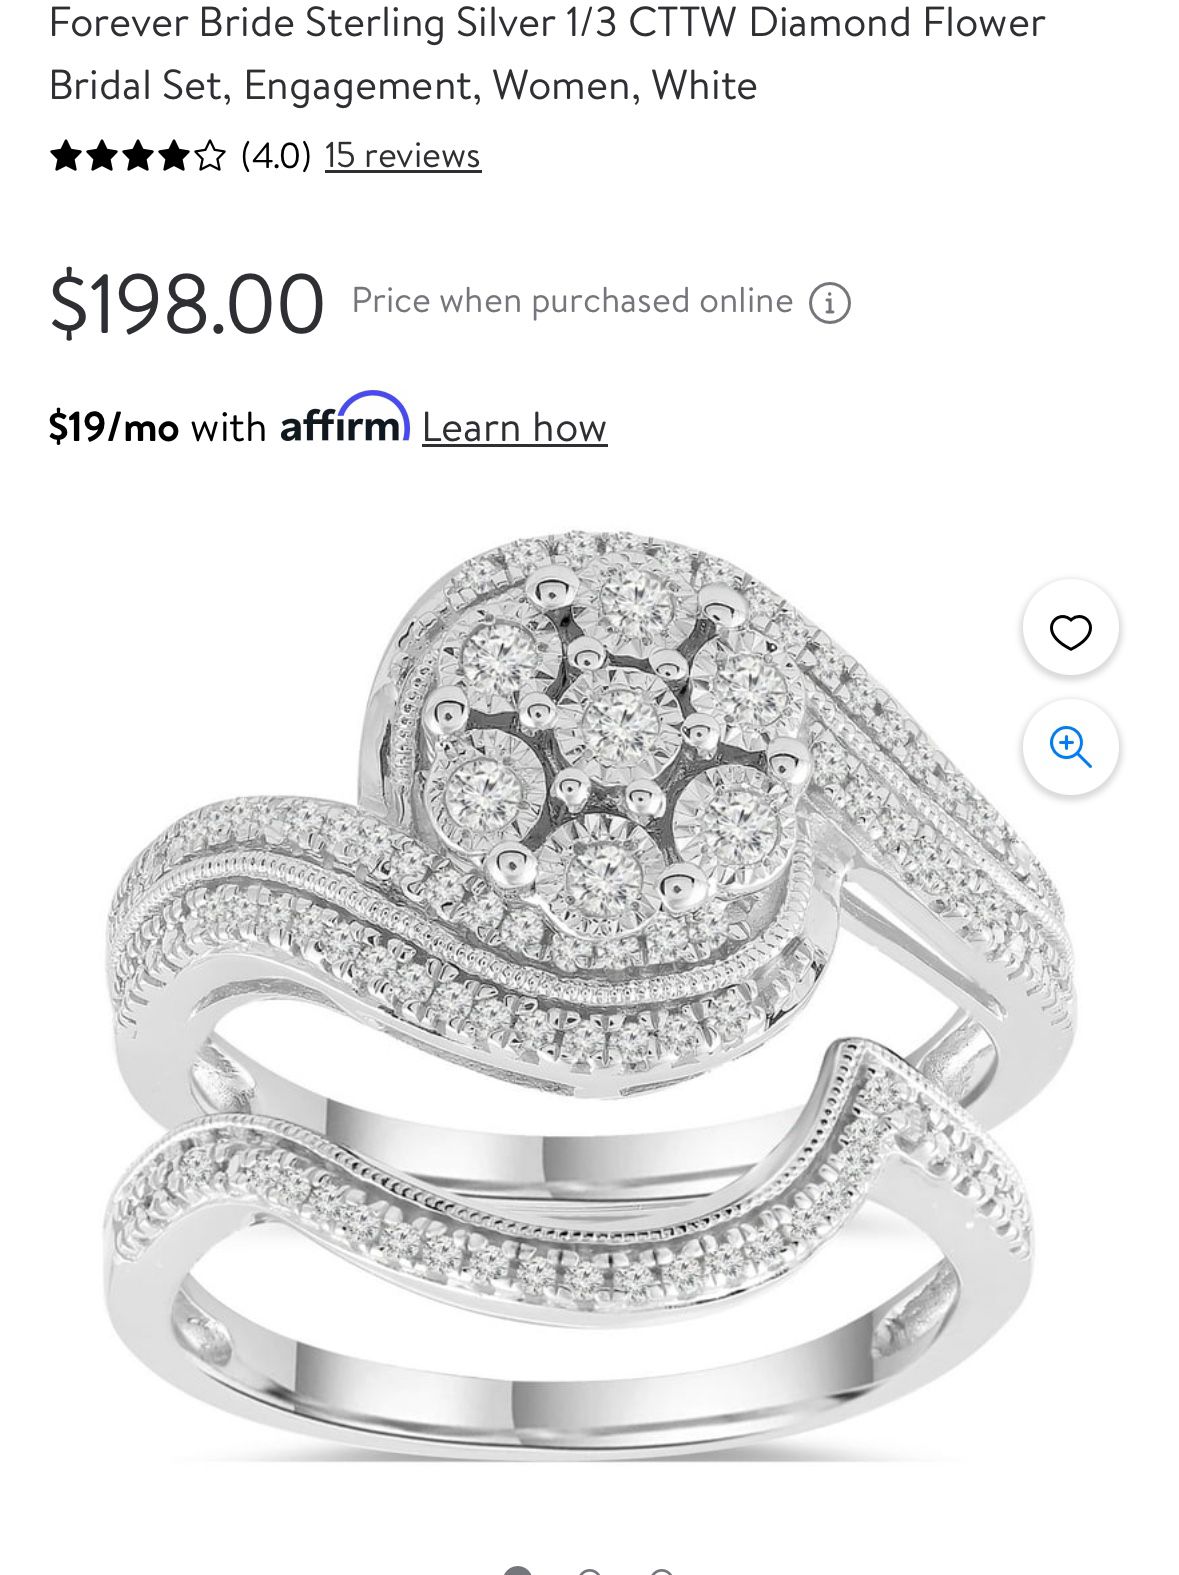 Engagement/Bridal Ring Set